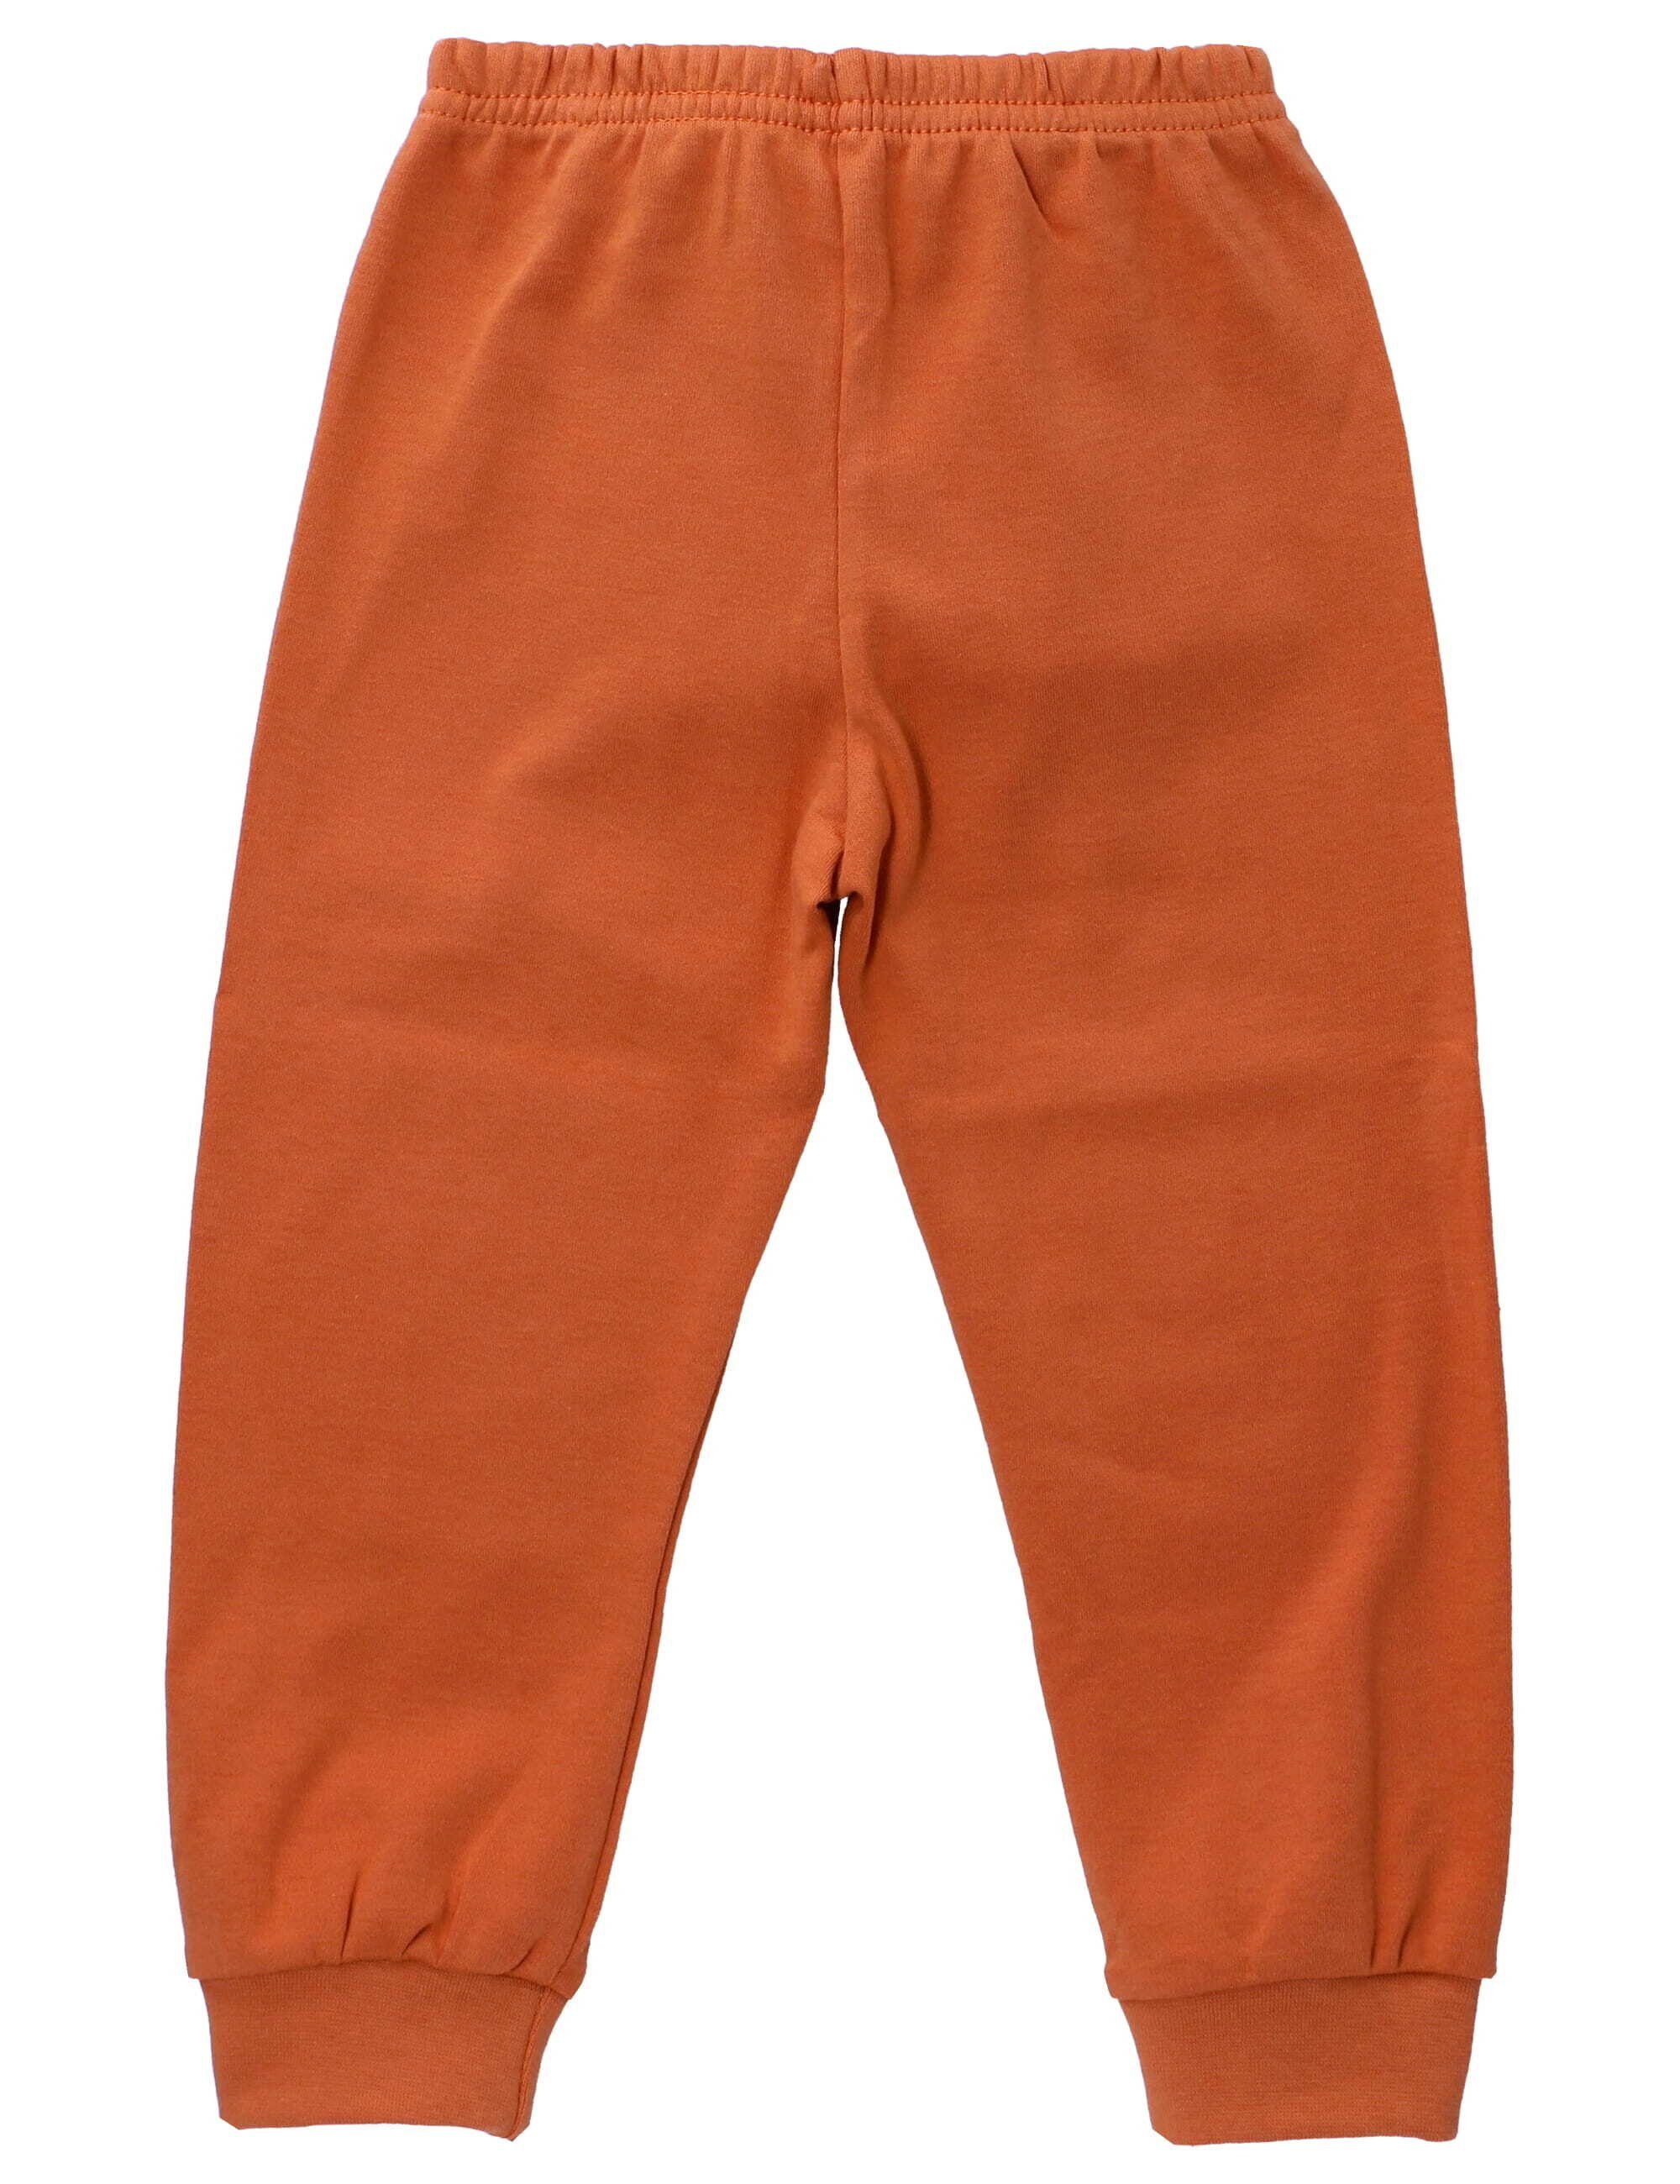 Baby Sweets Schlafanzug Set grau orange Waldtiere (1 tlg)